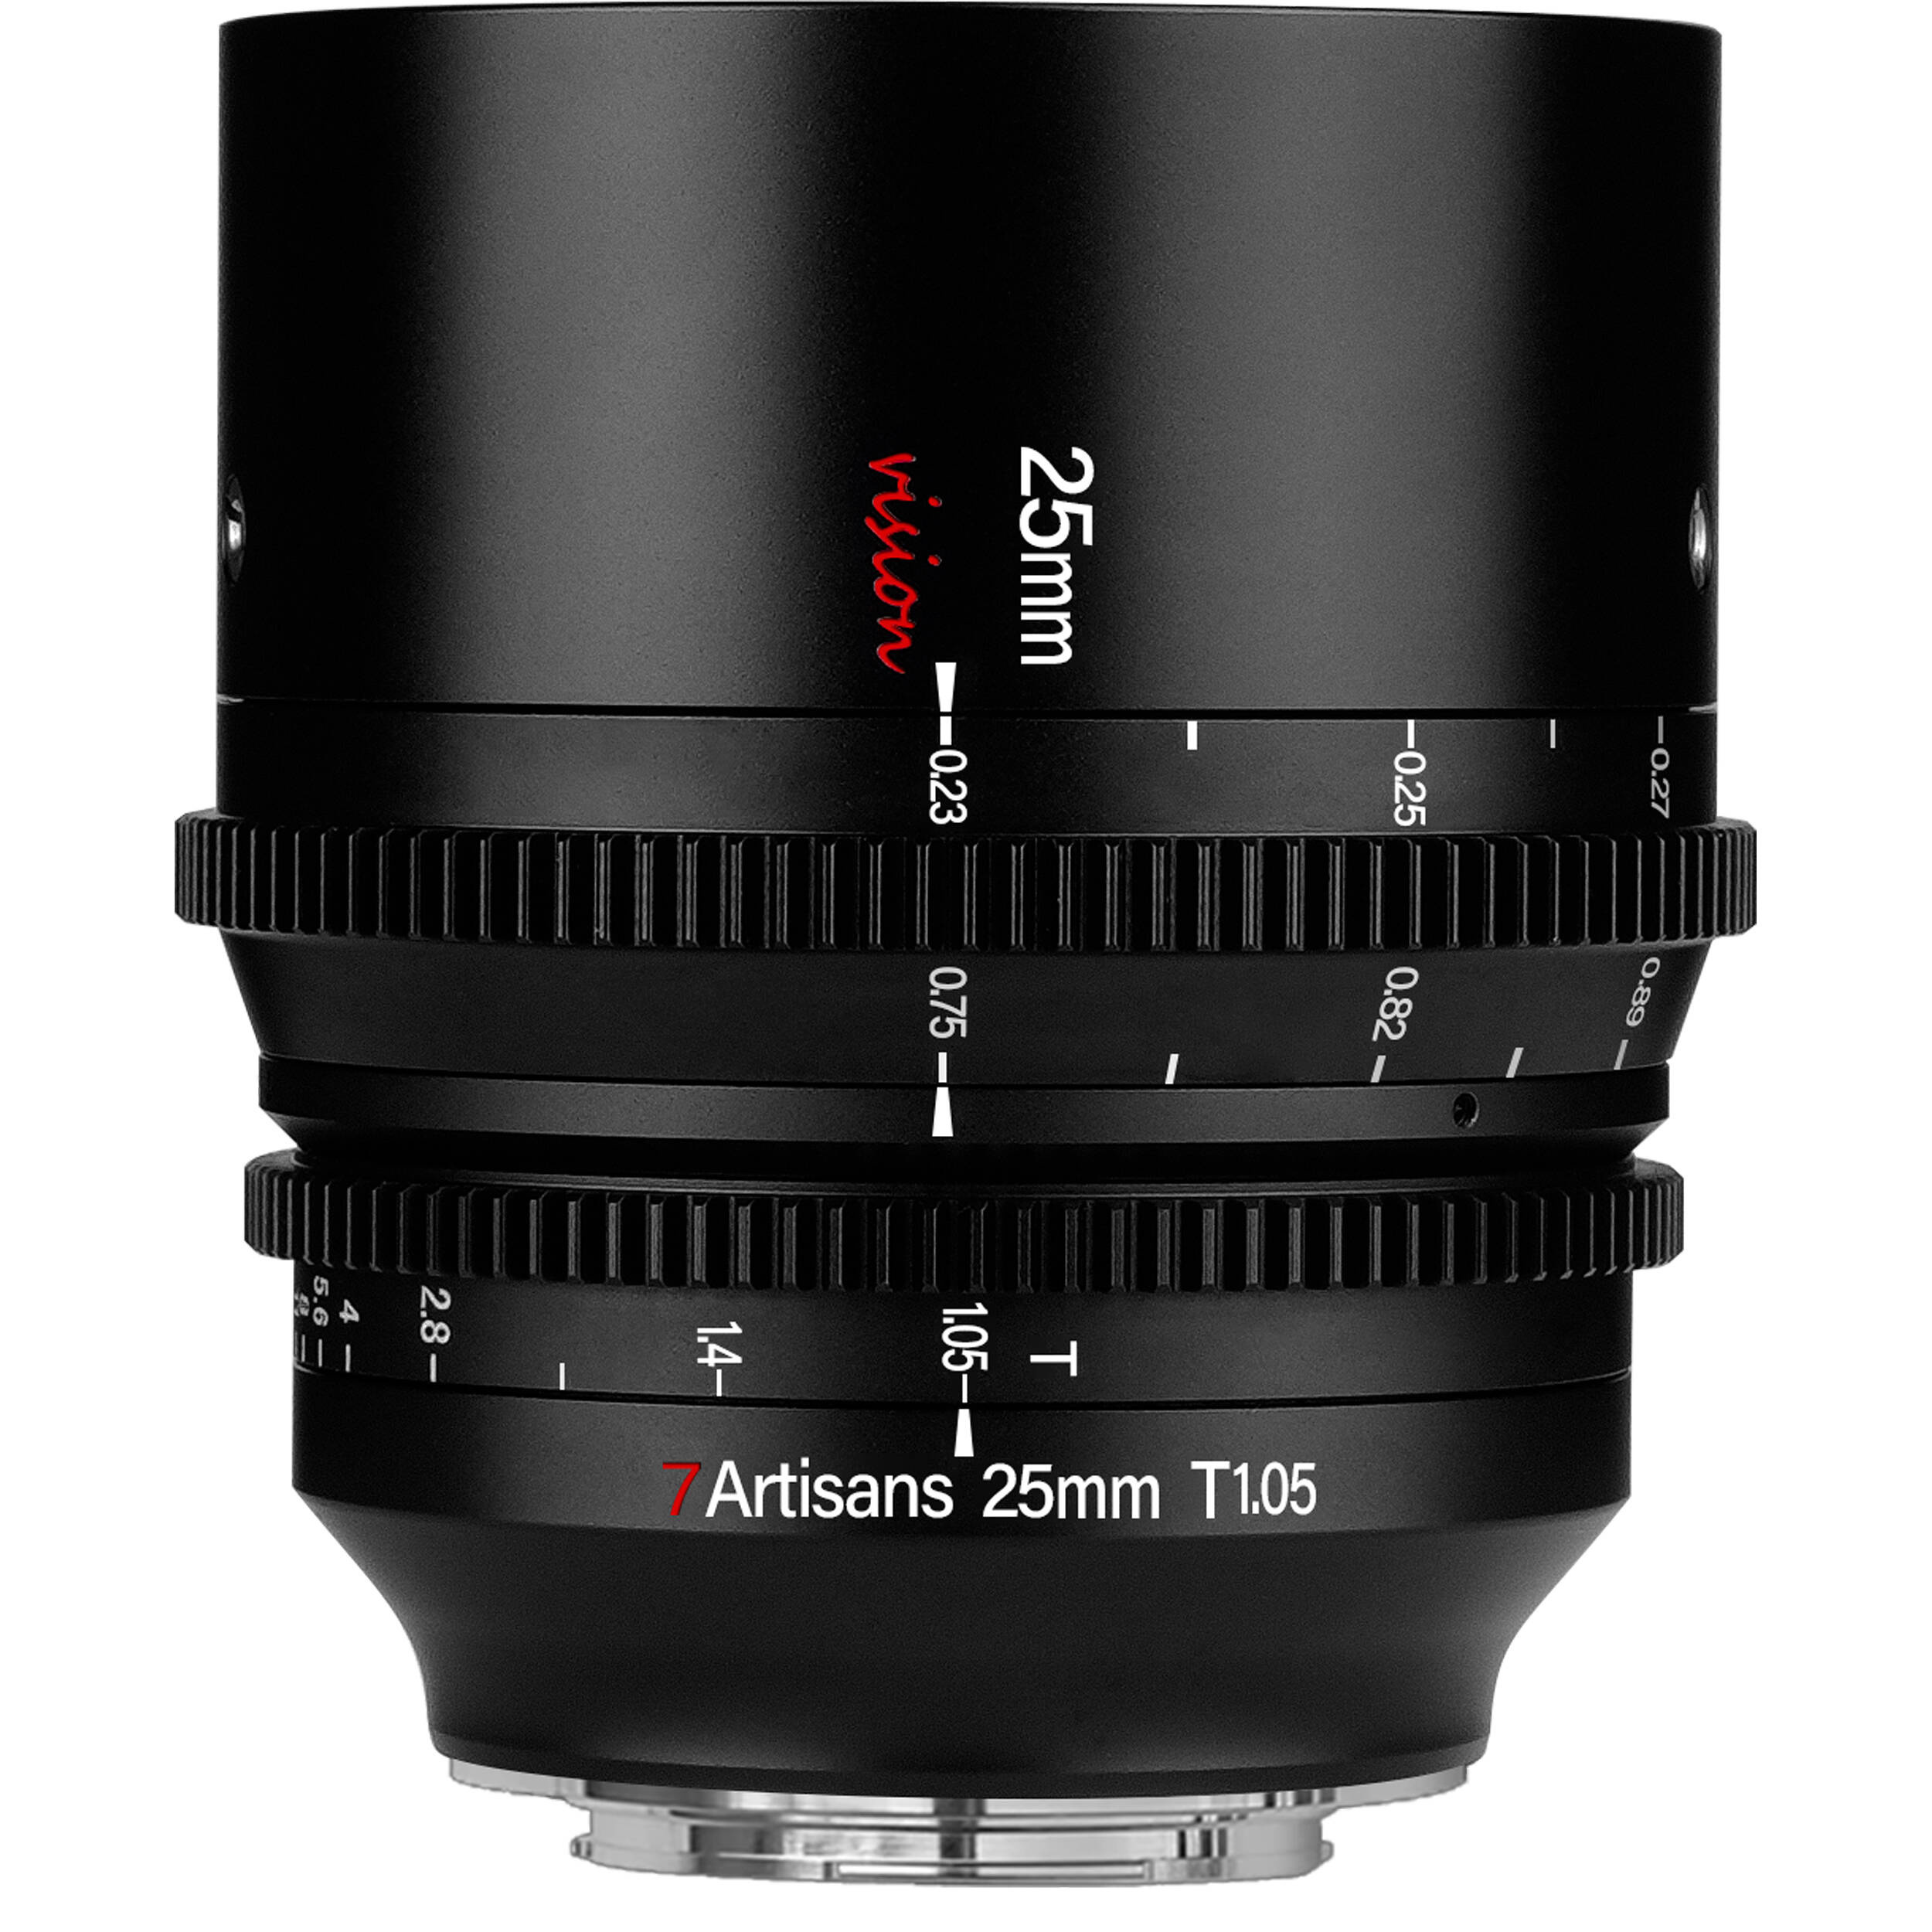 7Artisans 25mm T1.05 Vision Cine Lens (Micro Four Thirds)